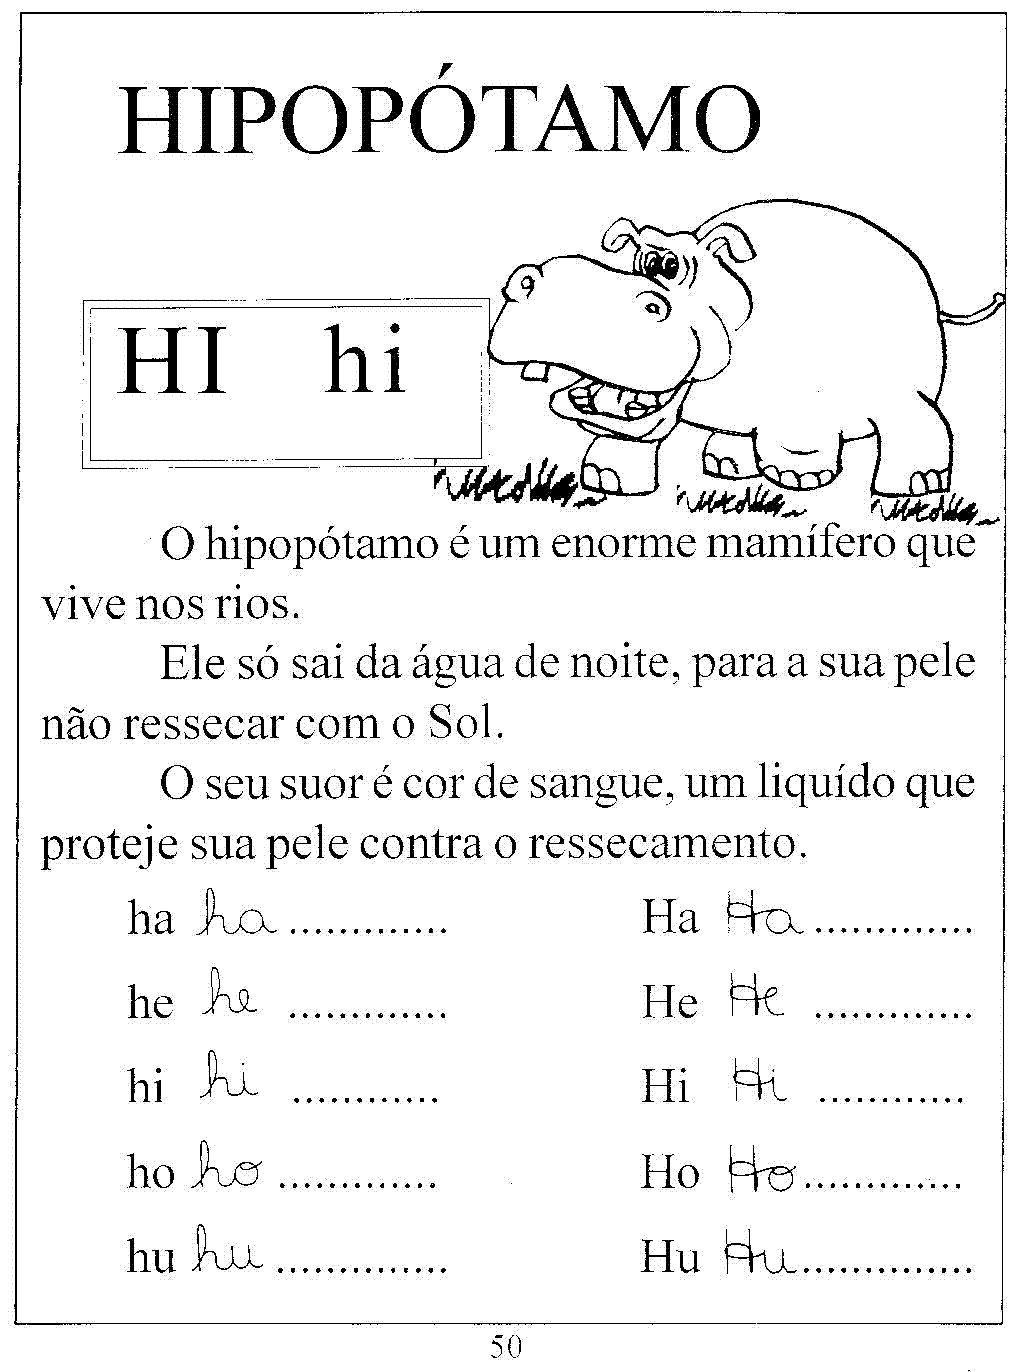 [hipopotamo.gif]